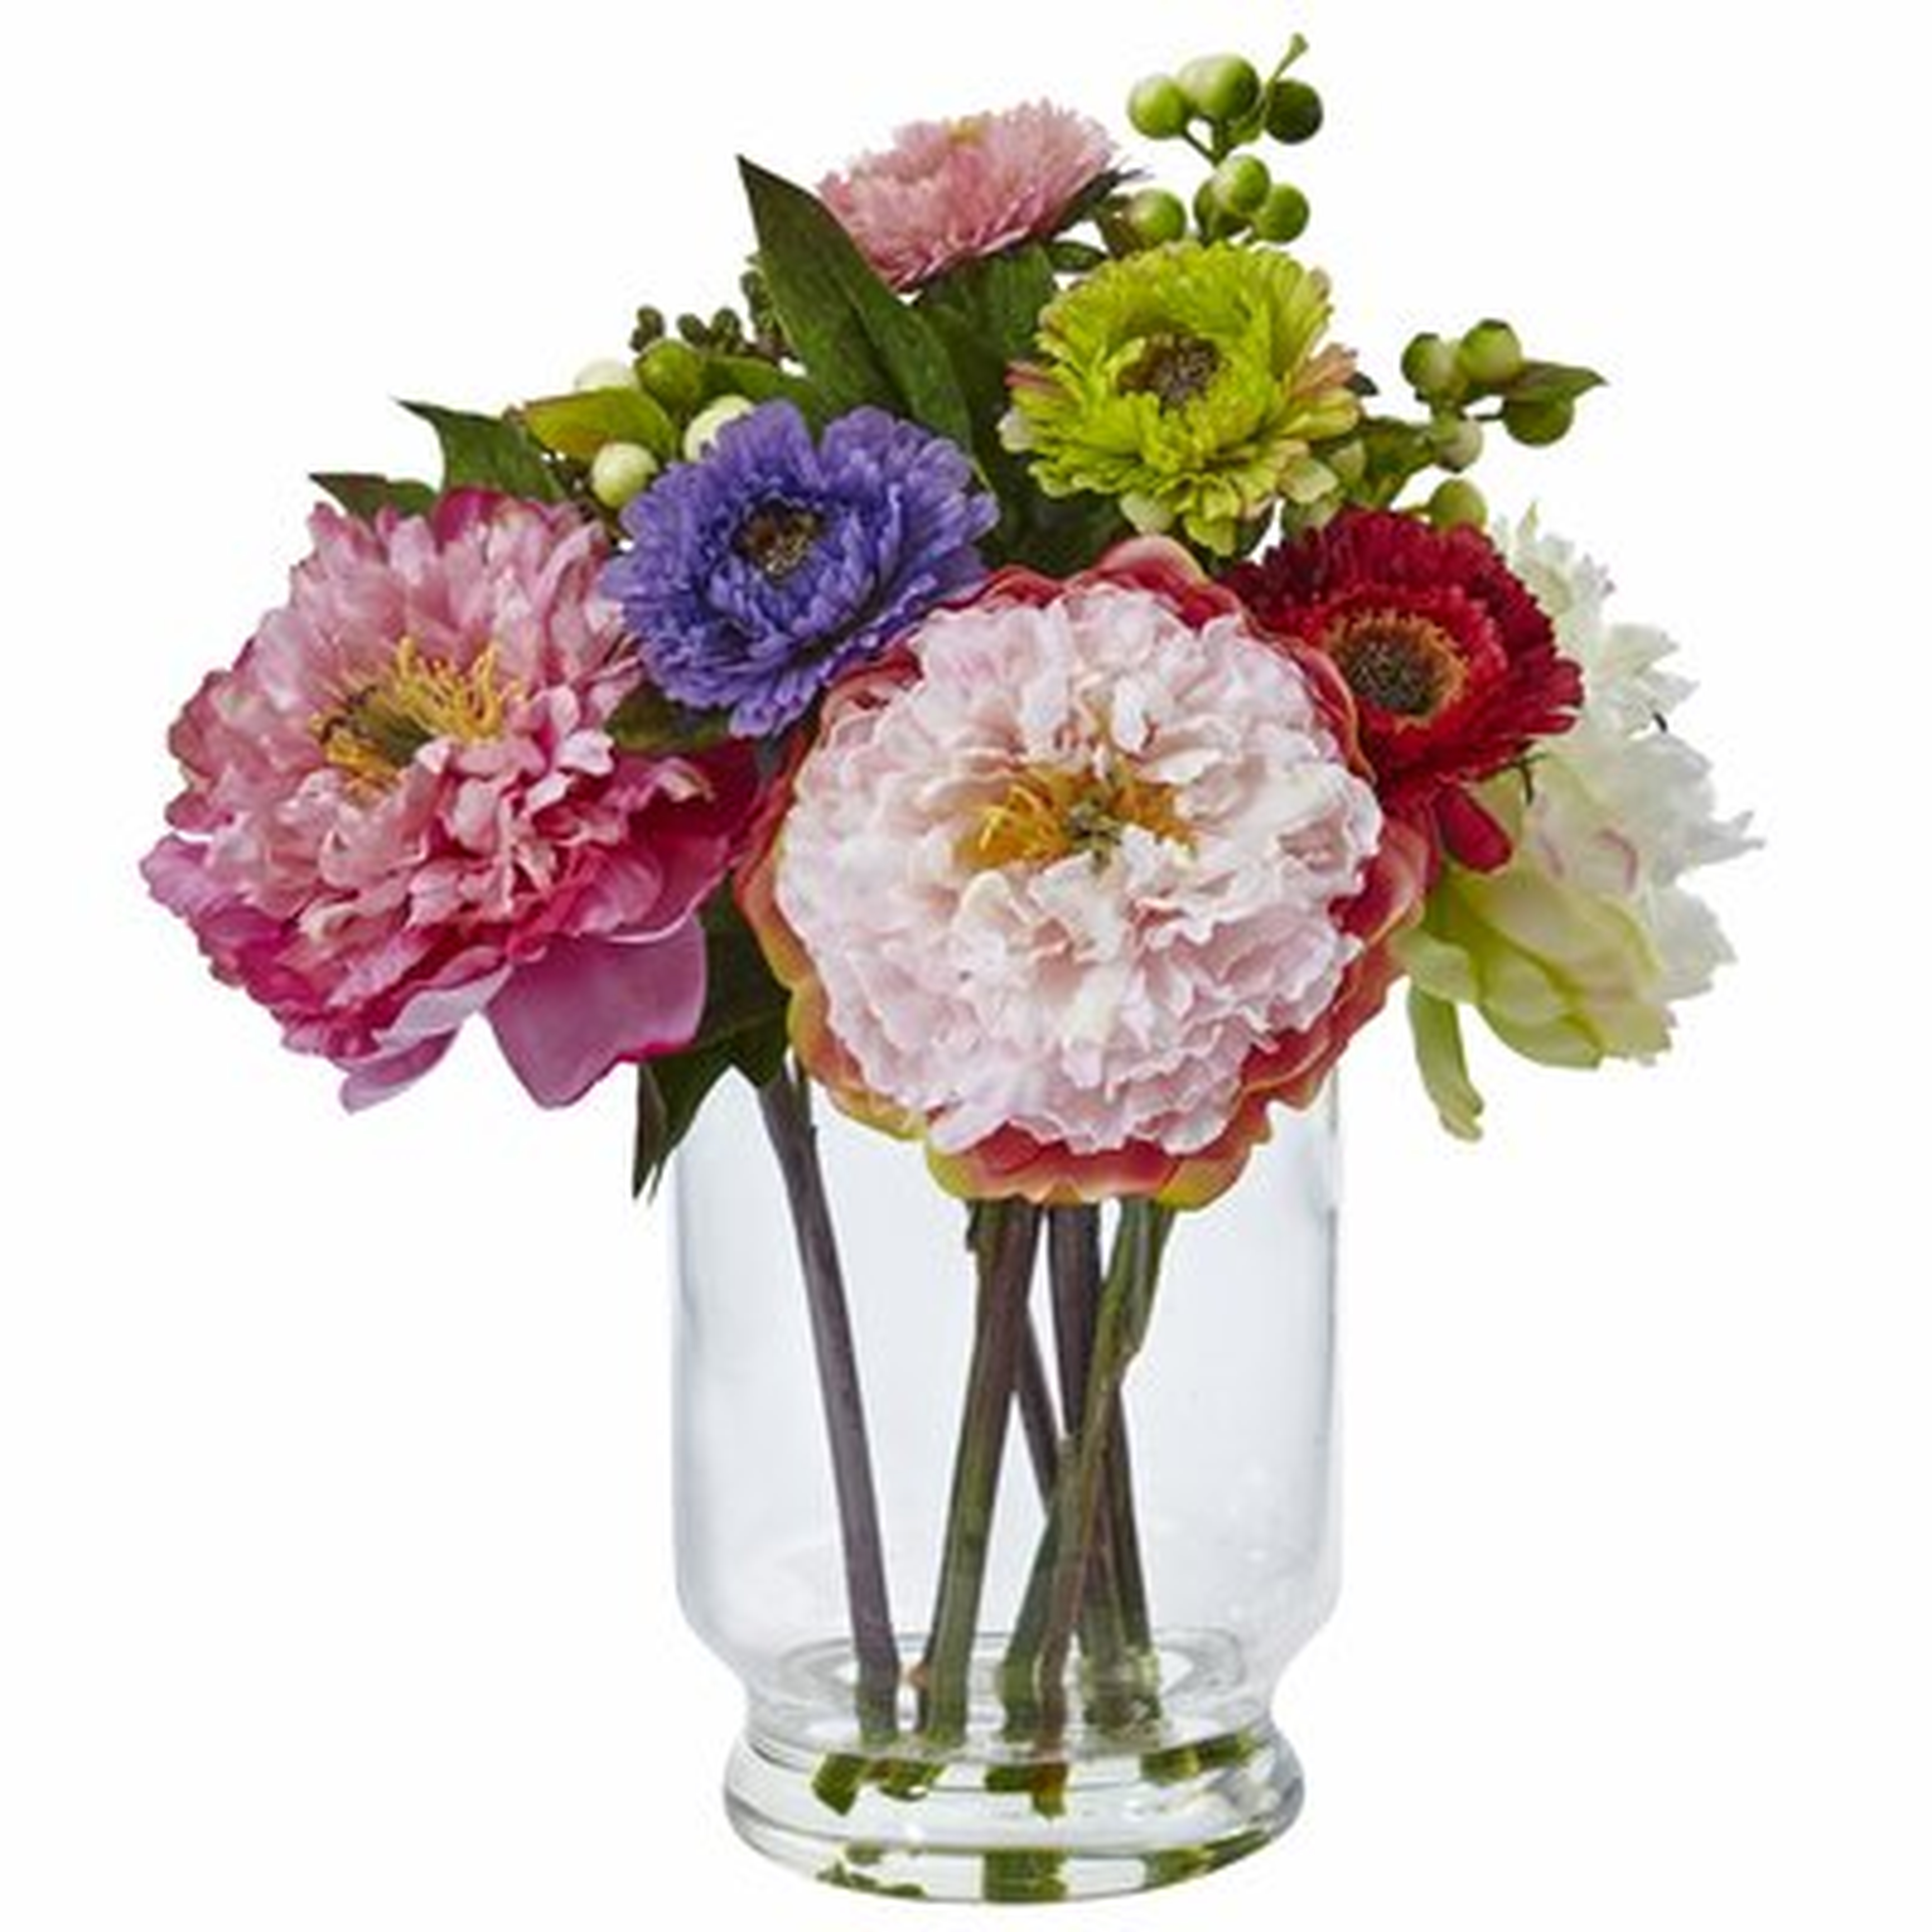 Peony and Mum Floral Arrangement in Decorative Vase - Birch Lane